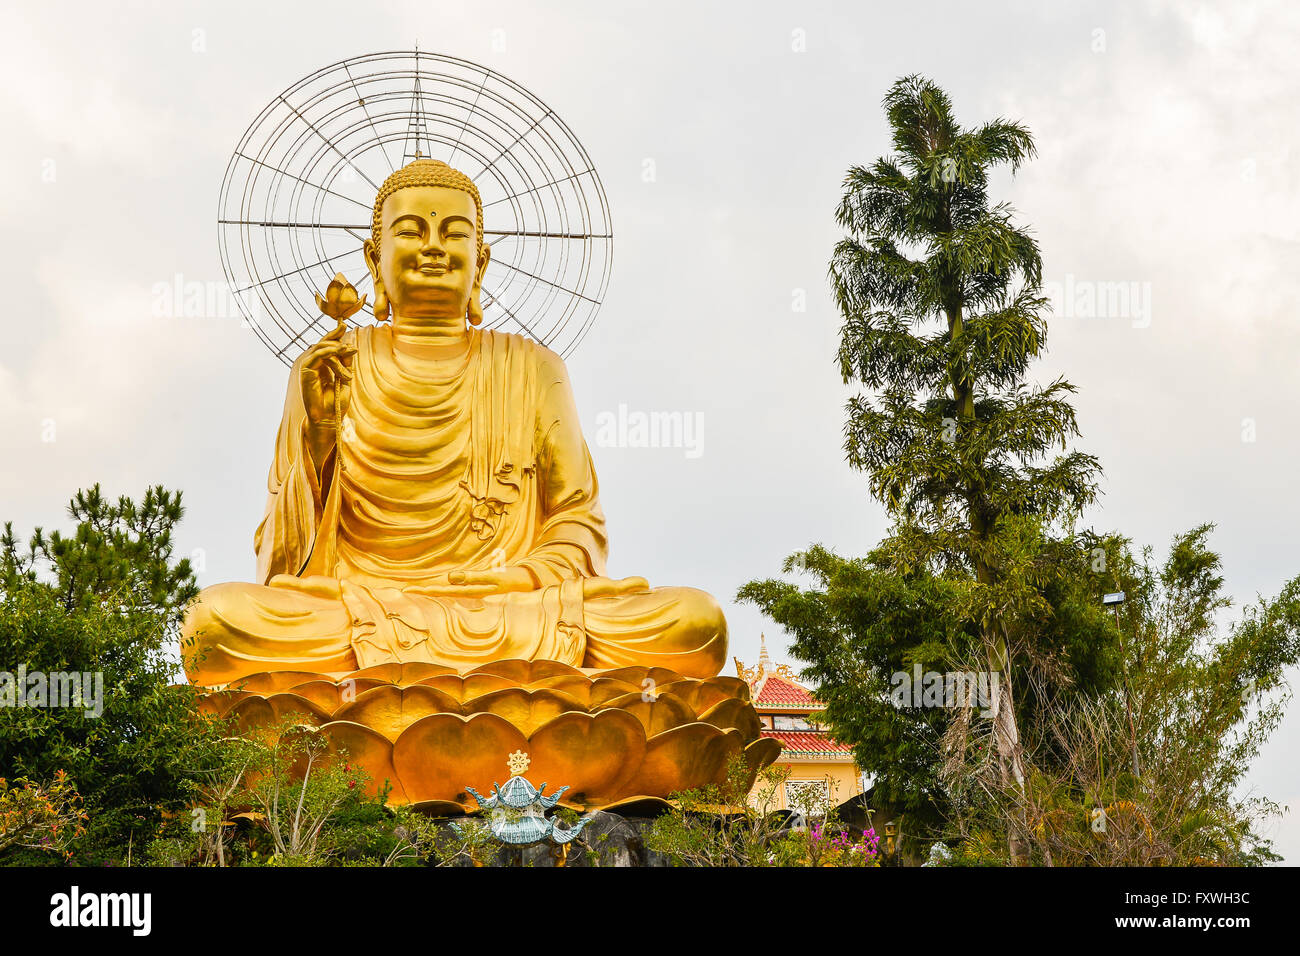 Giant Golden Buddha at Van Hanh Pagoda Compound - Da Lat, Vietnam Stock Photo